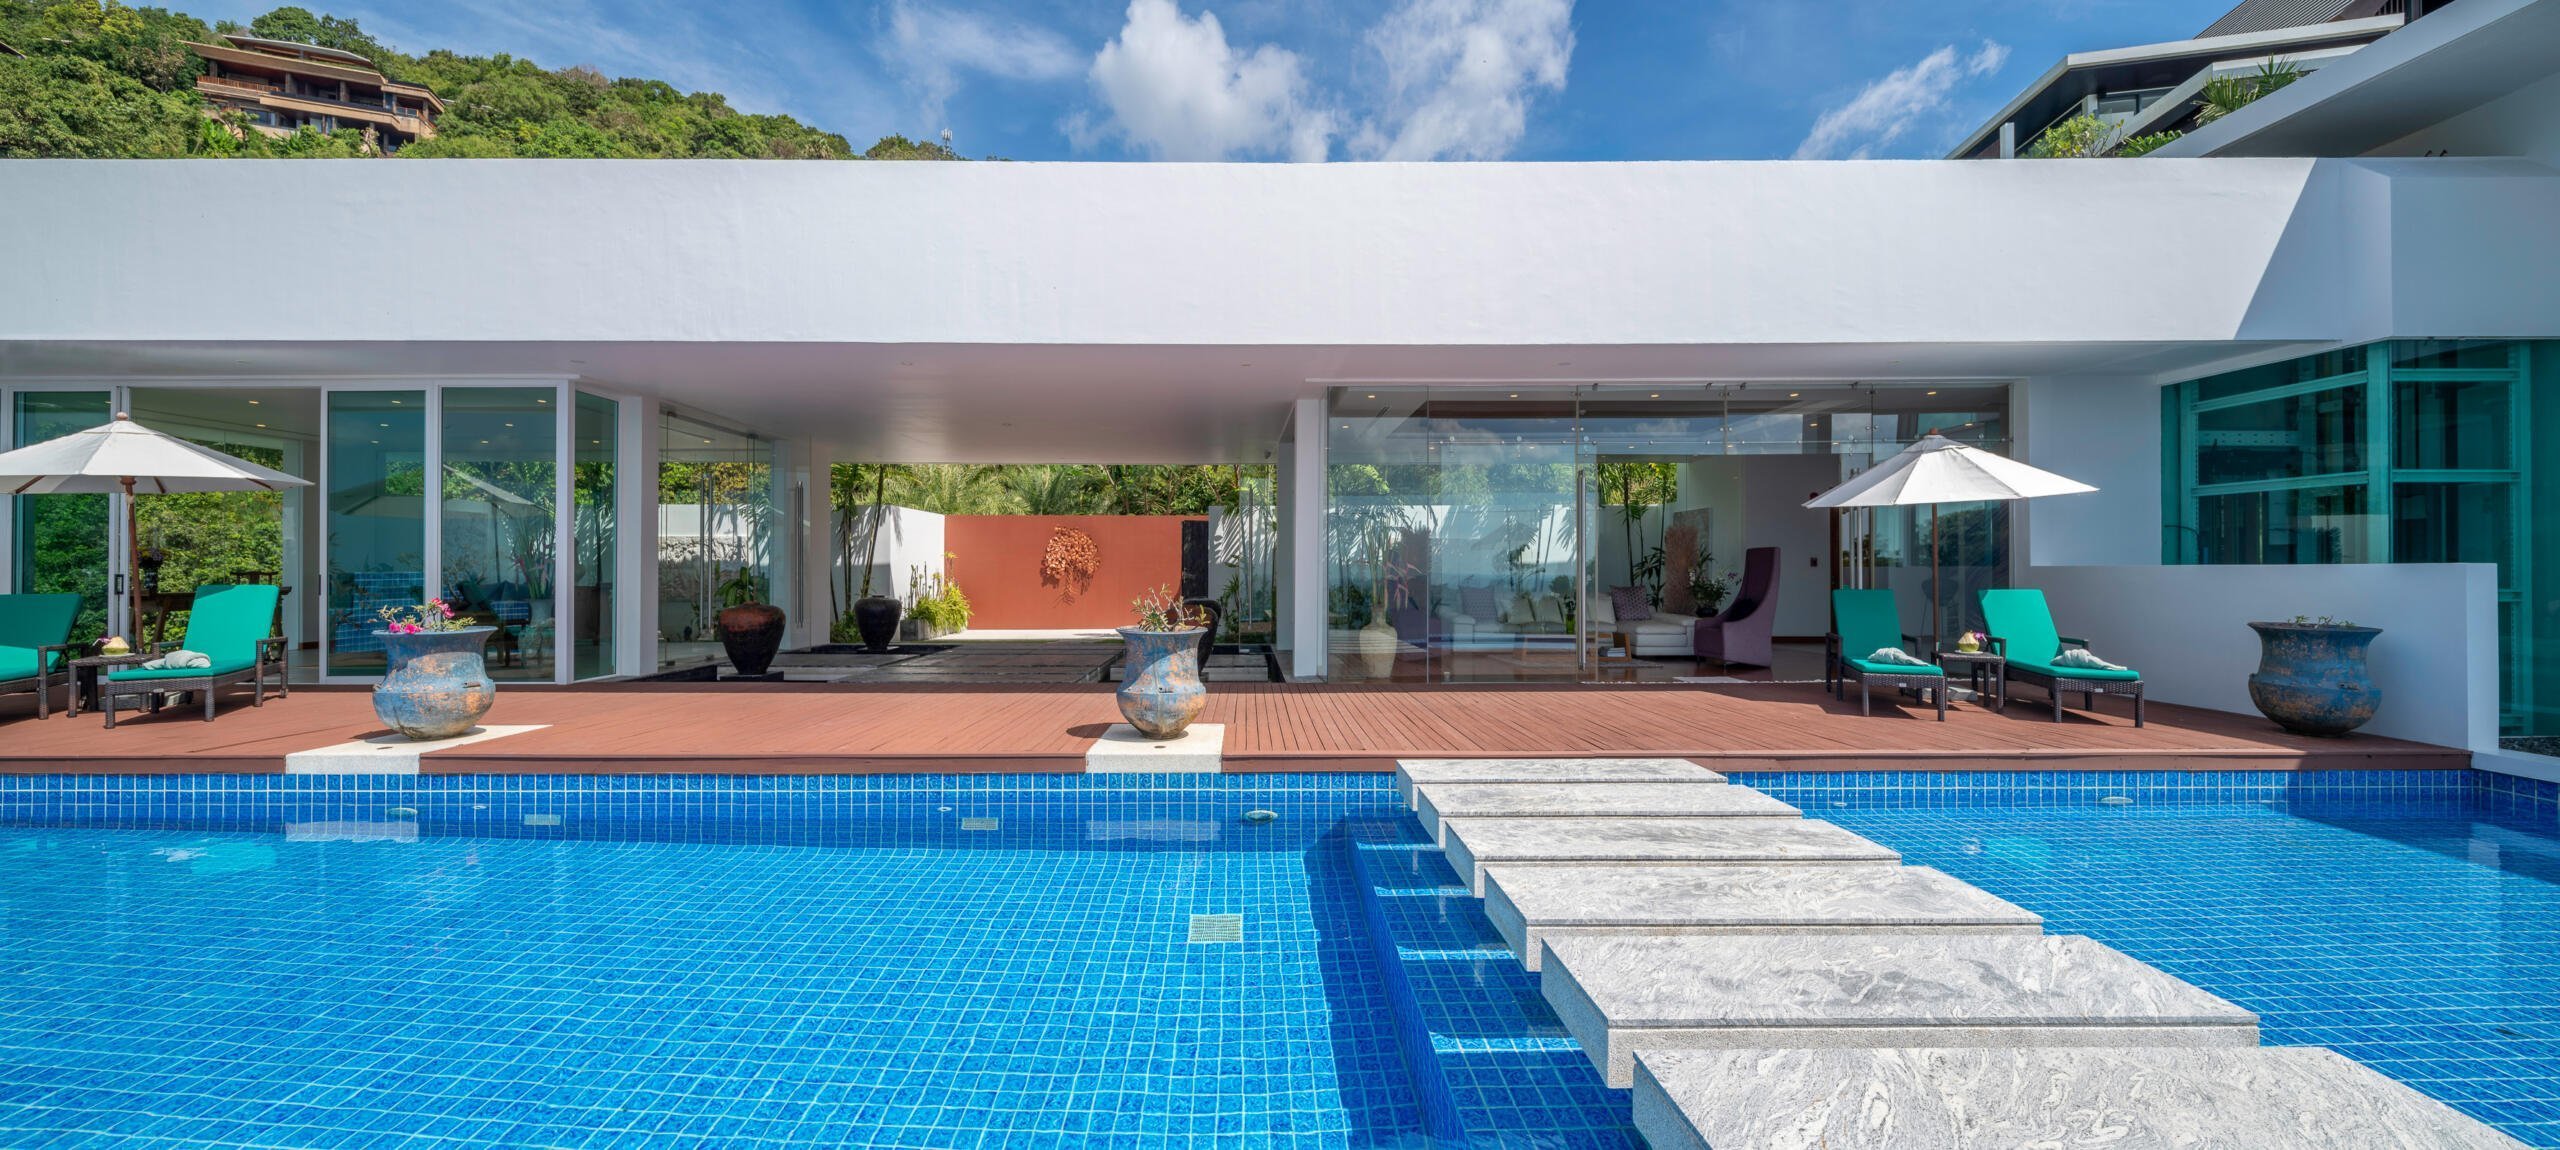 villa solaris main swimming pool walkway, entrance, sitting and lounge room exterior view